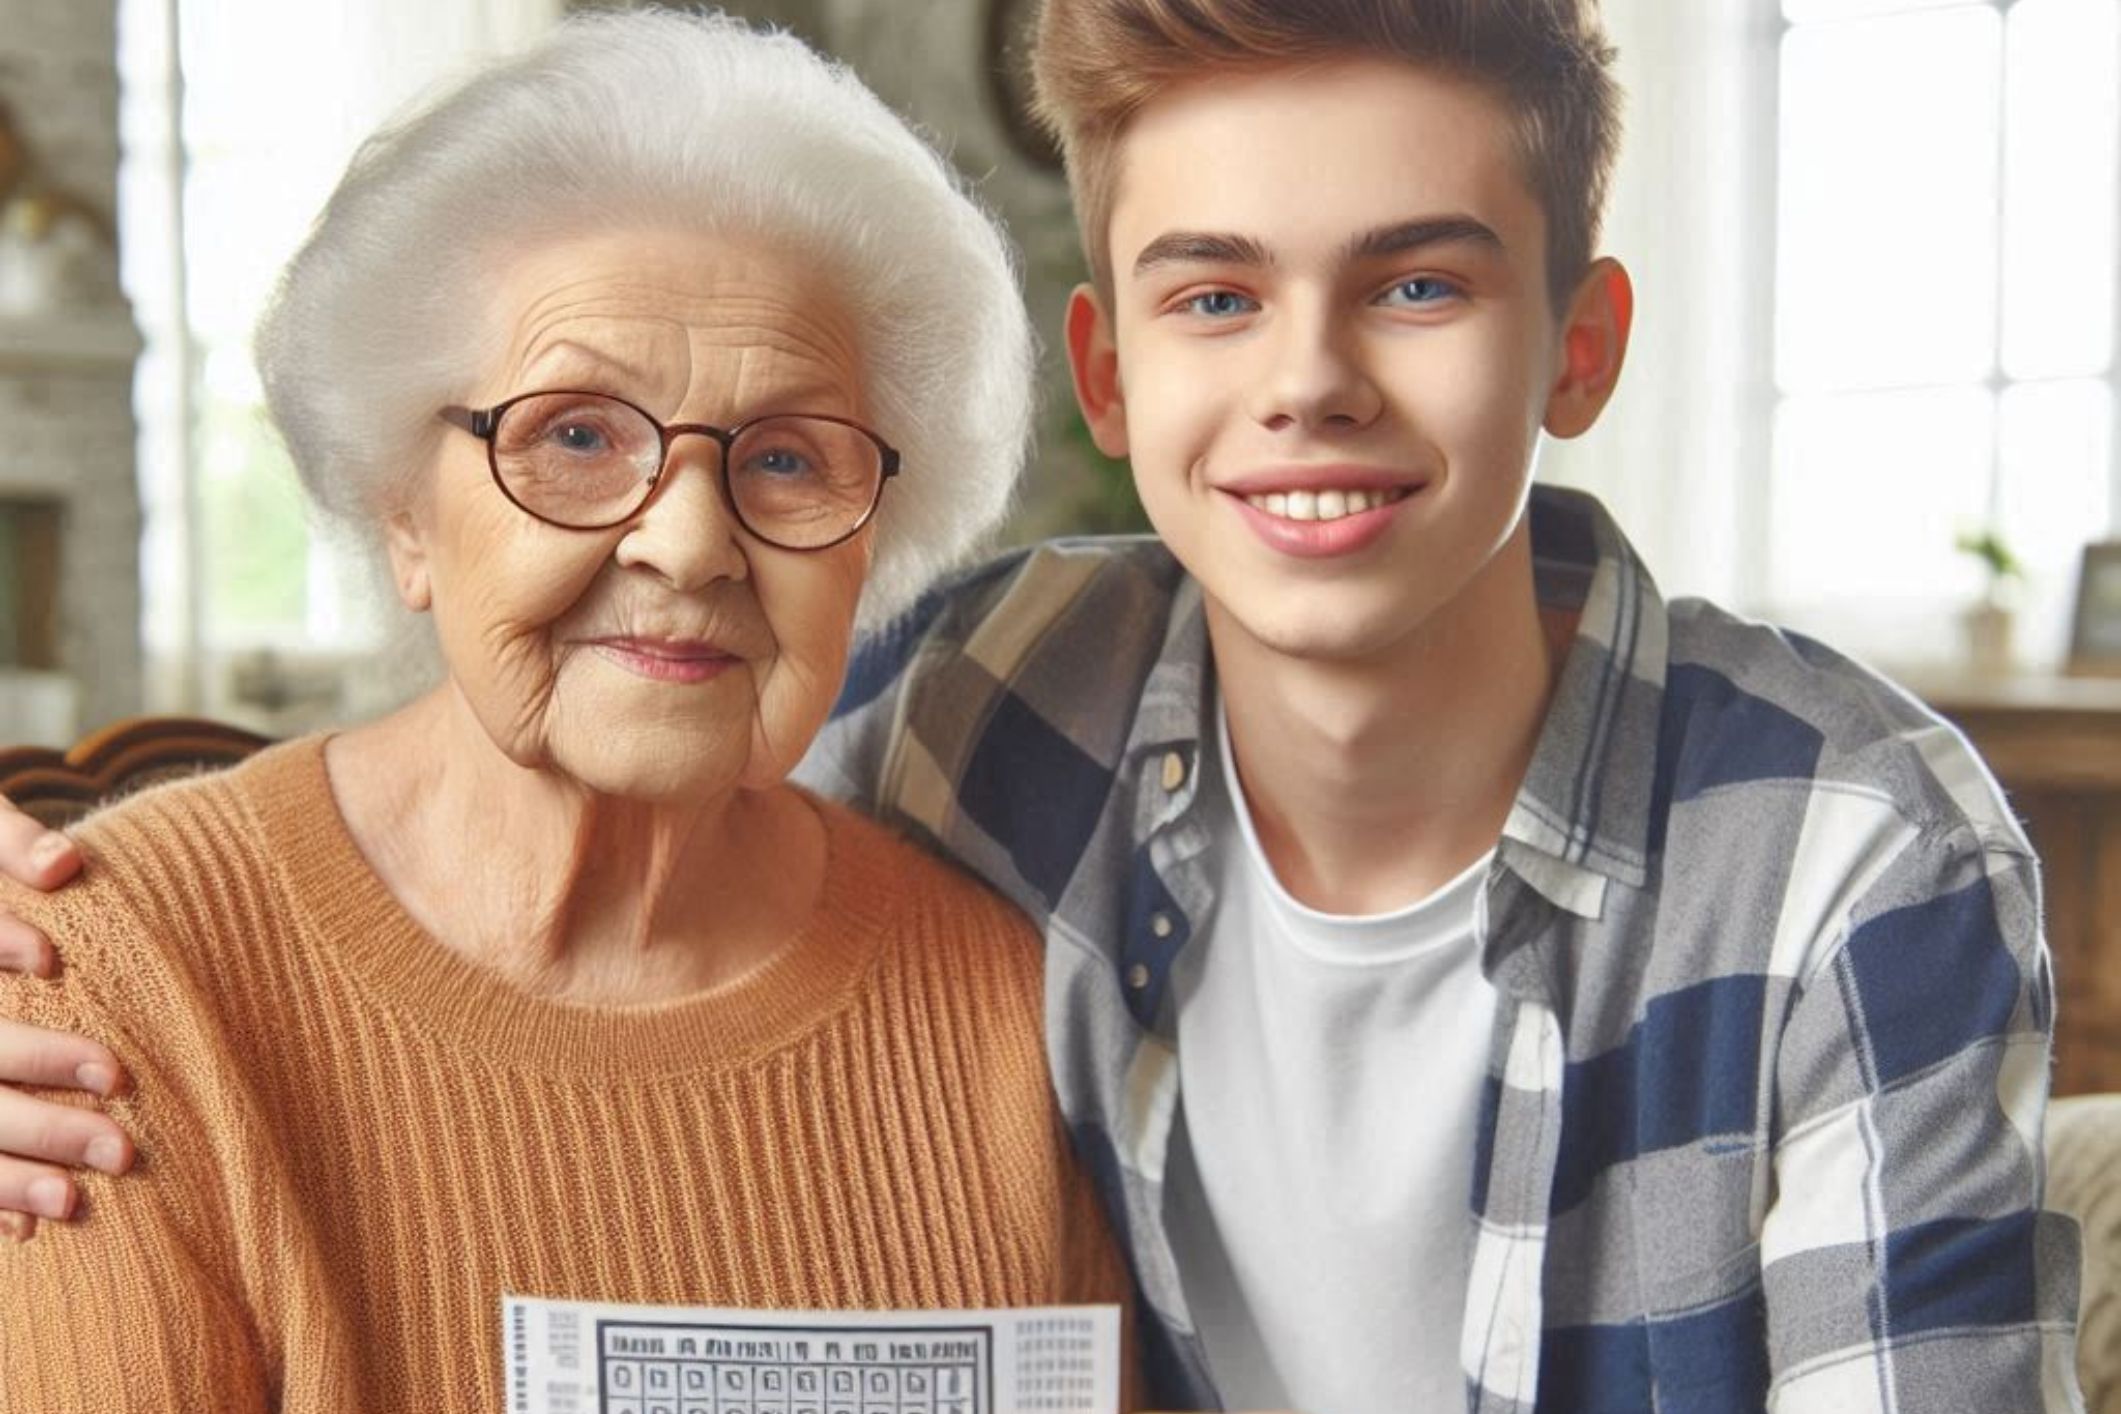 NSW grandma gifts grandson $1 million lotto ticket for his birthday